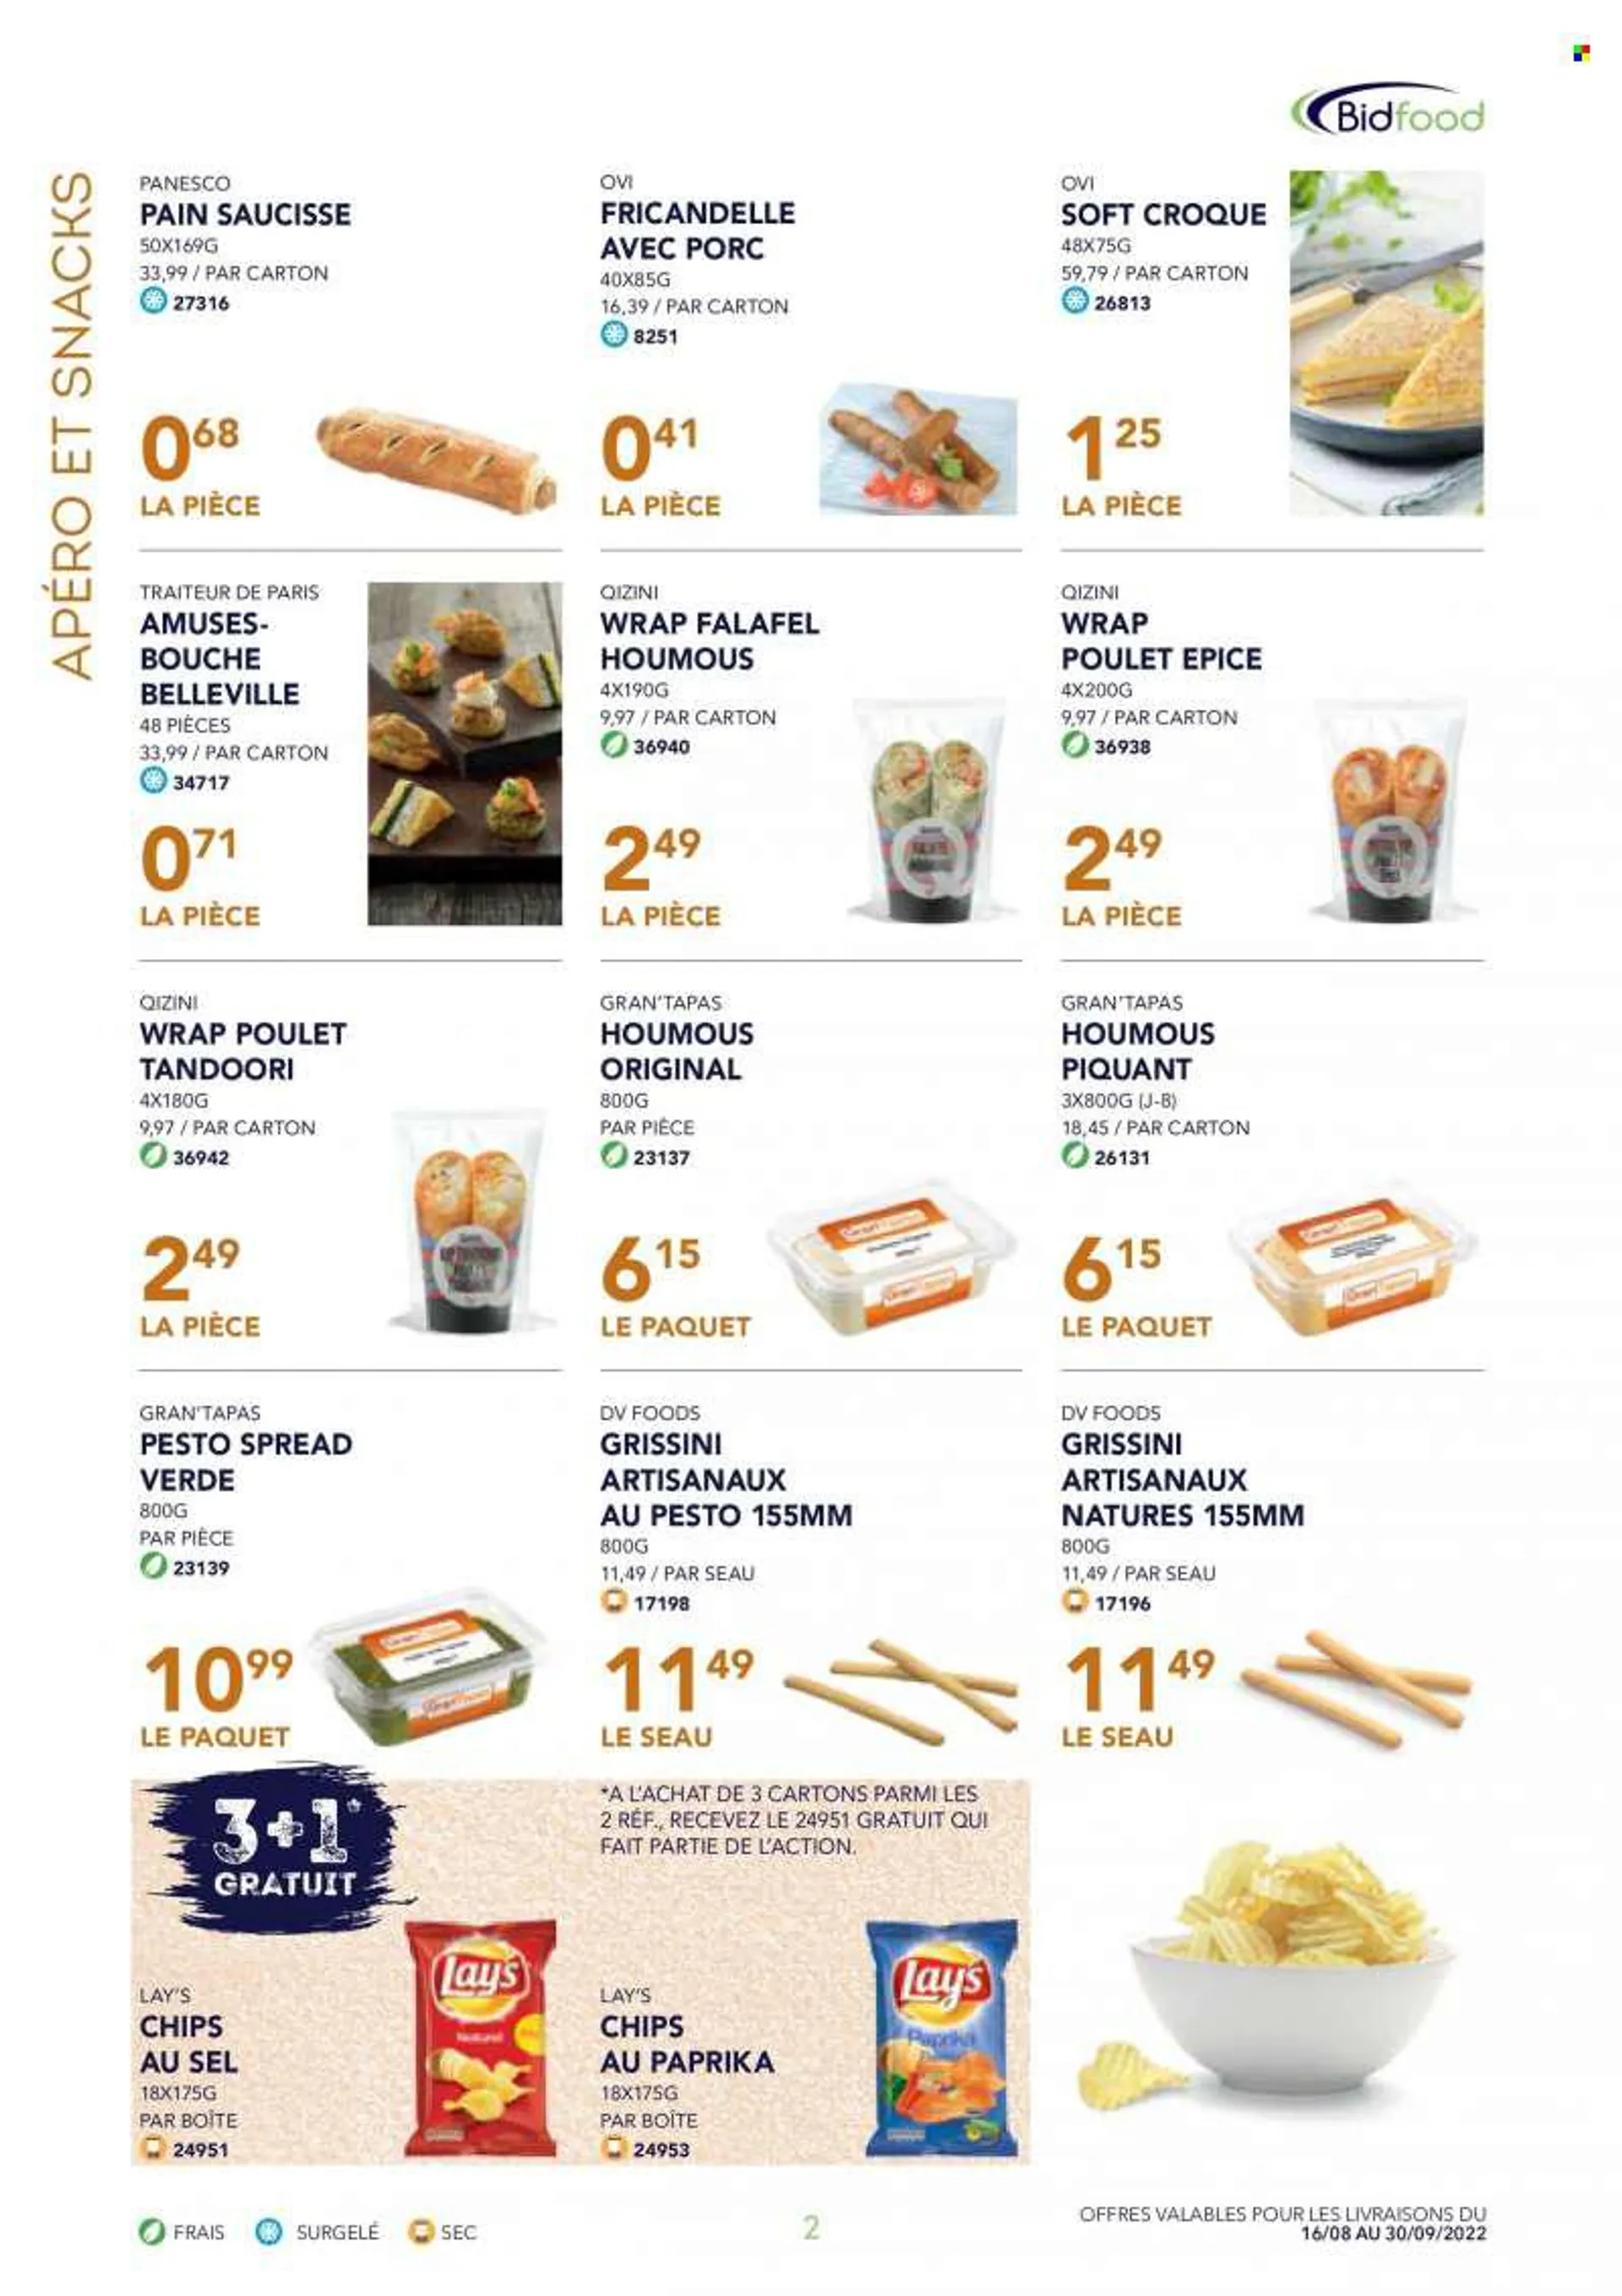 Bidfood-aanbieding - 16.8.2022 - 30.9.2022 -  producten in de aanbieding - tapas, Falafel, hummus, chips, pesto. Pagina 2.